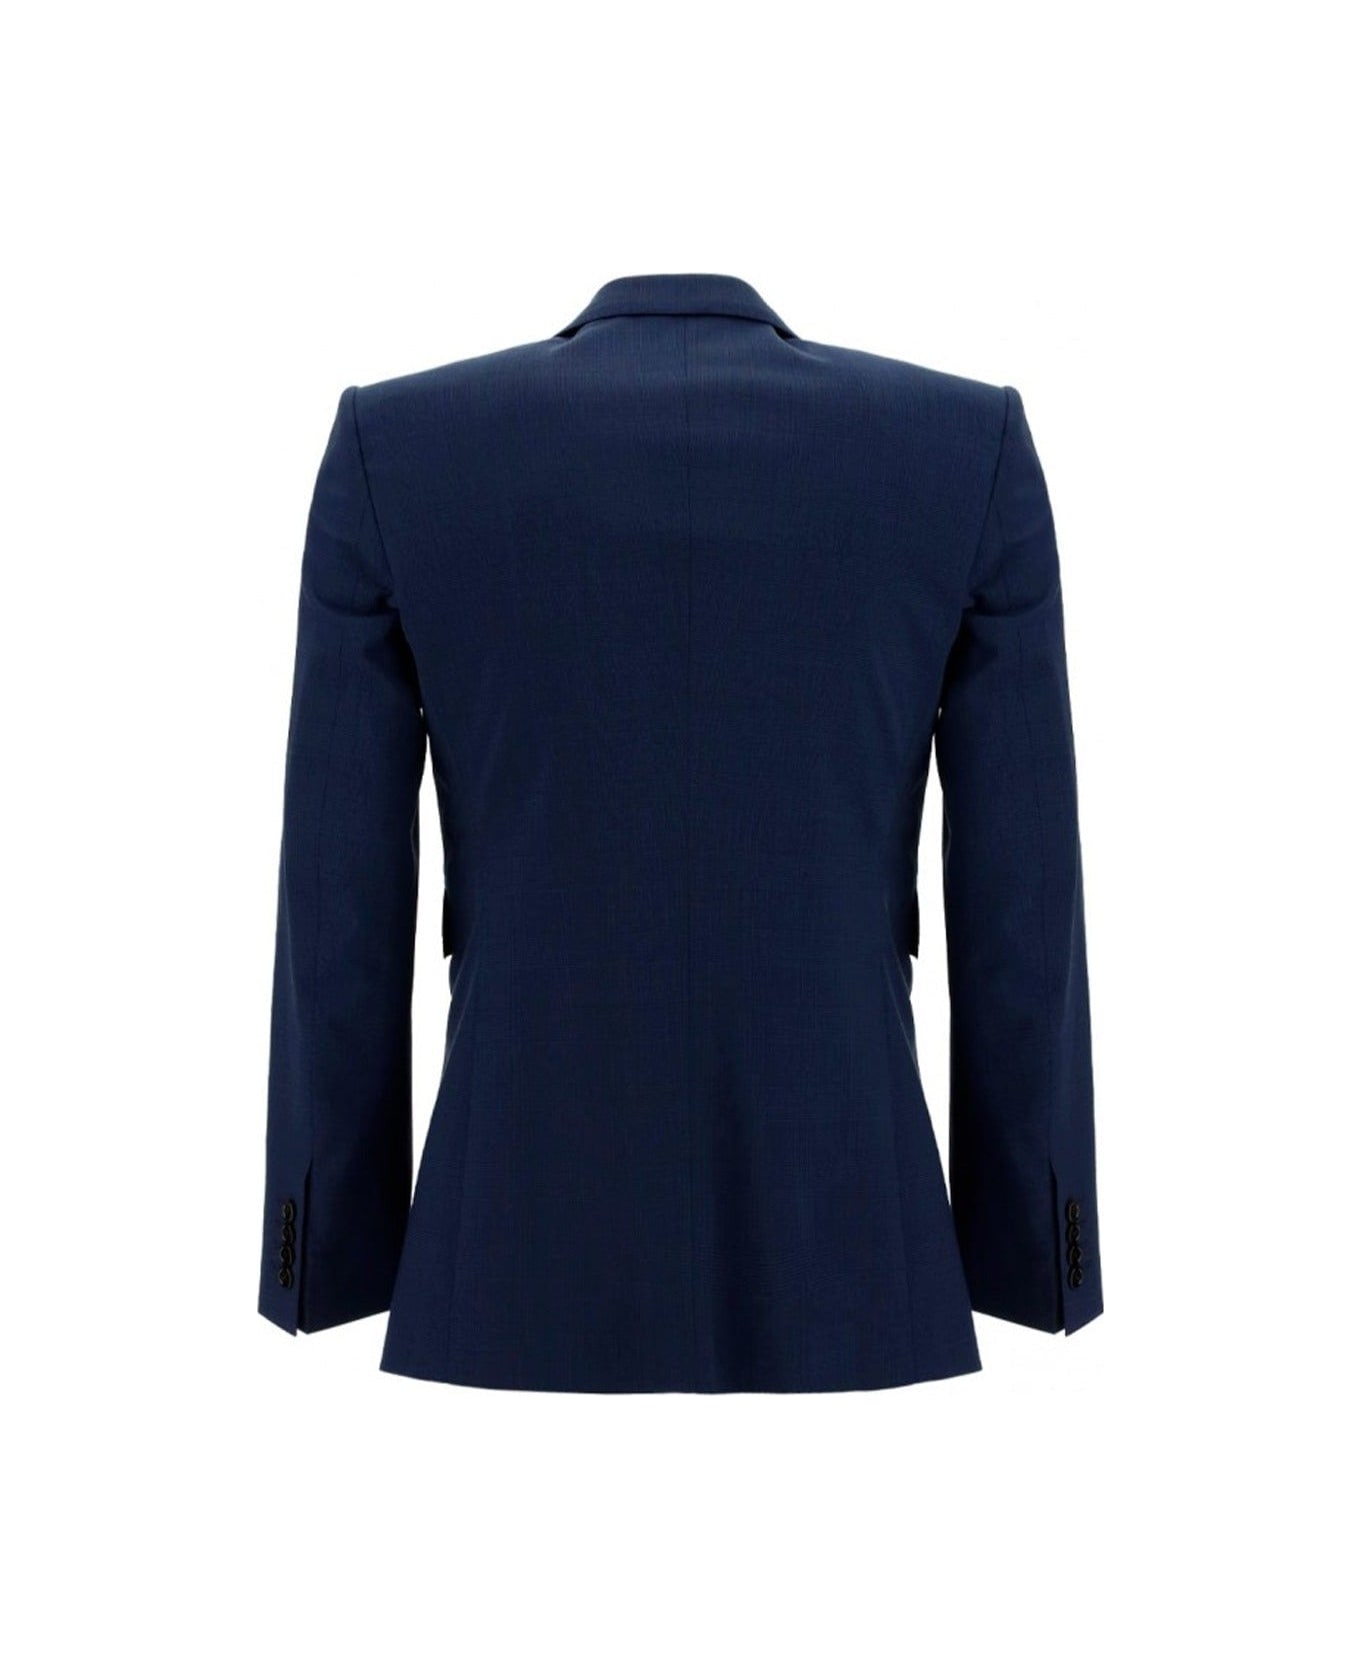 Dolce & Gabbana Wool Suit - Blue